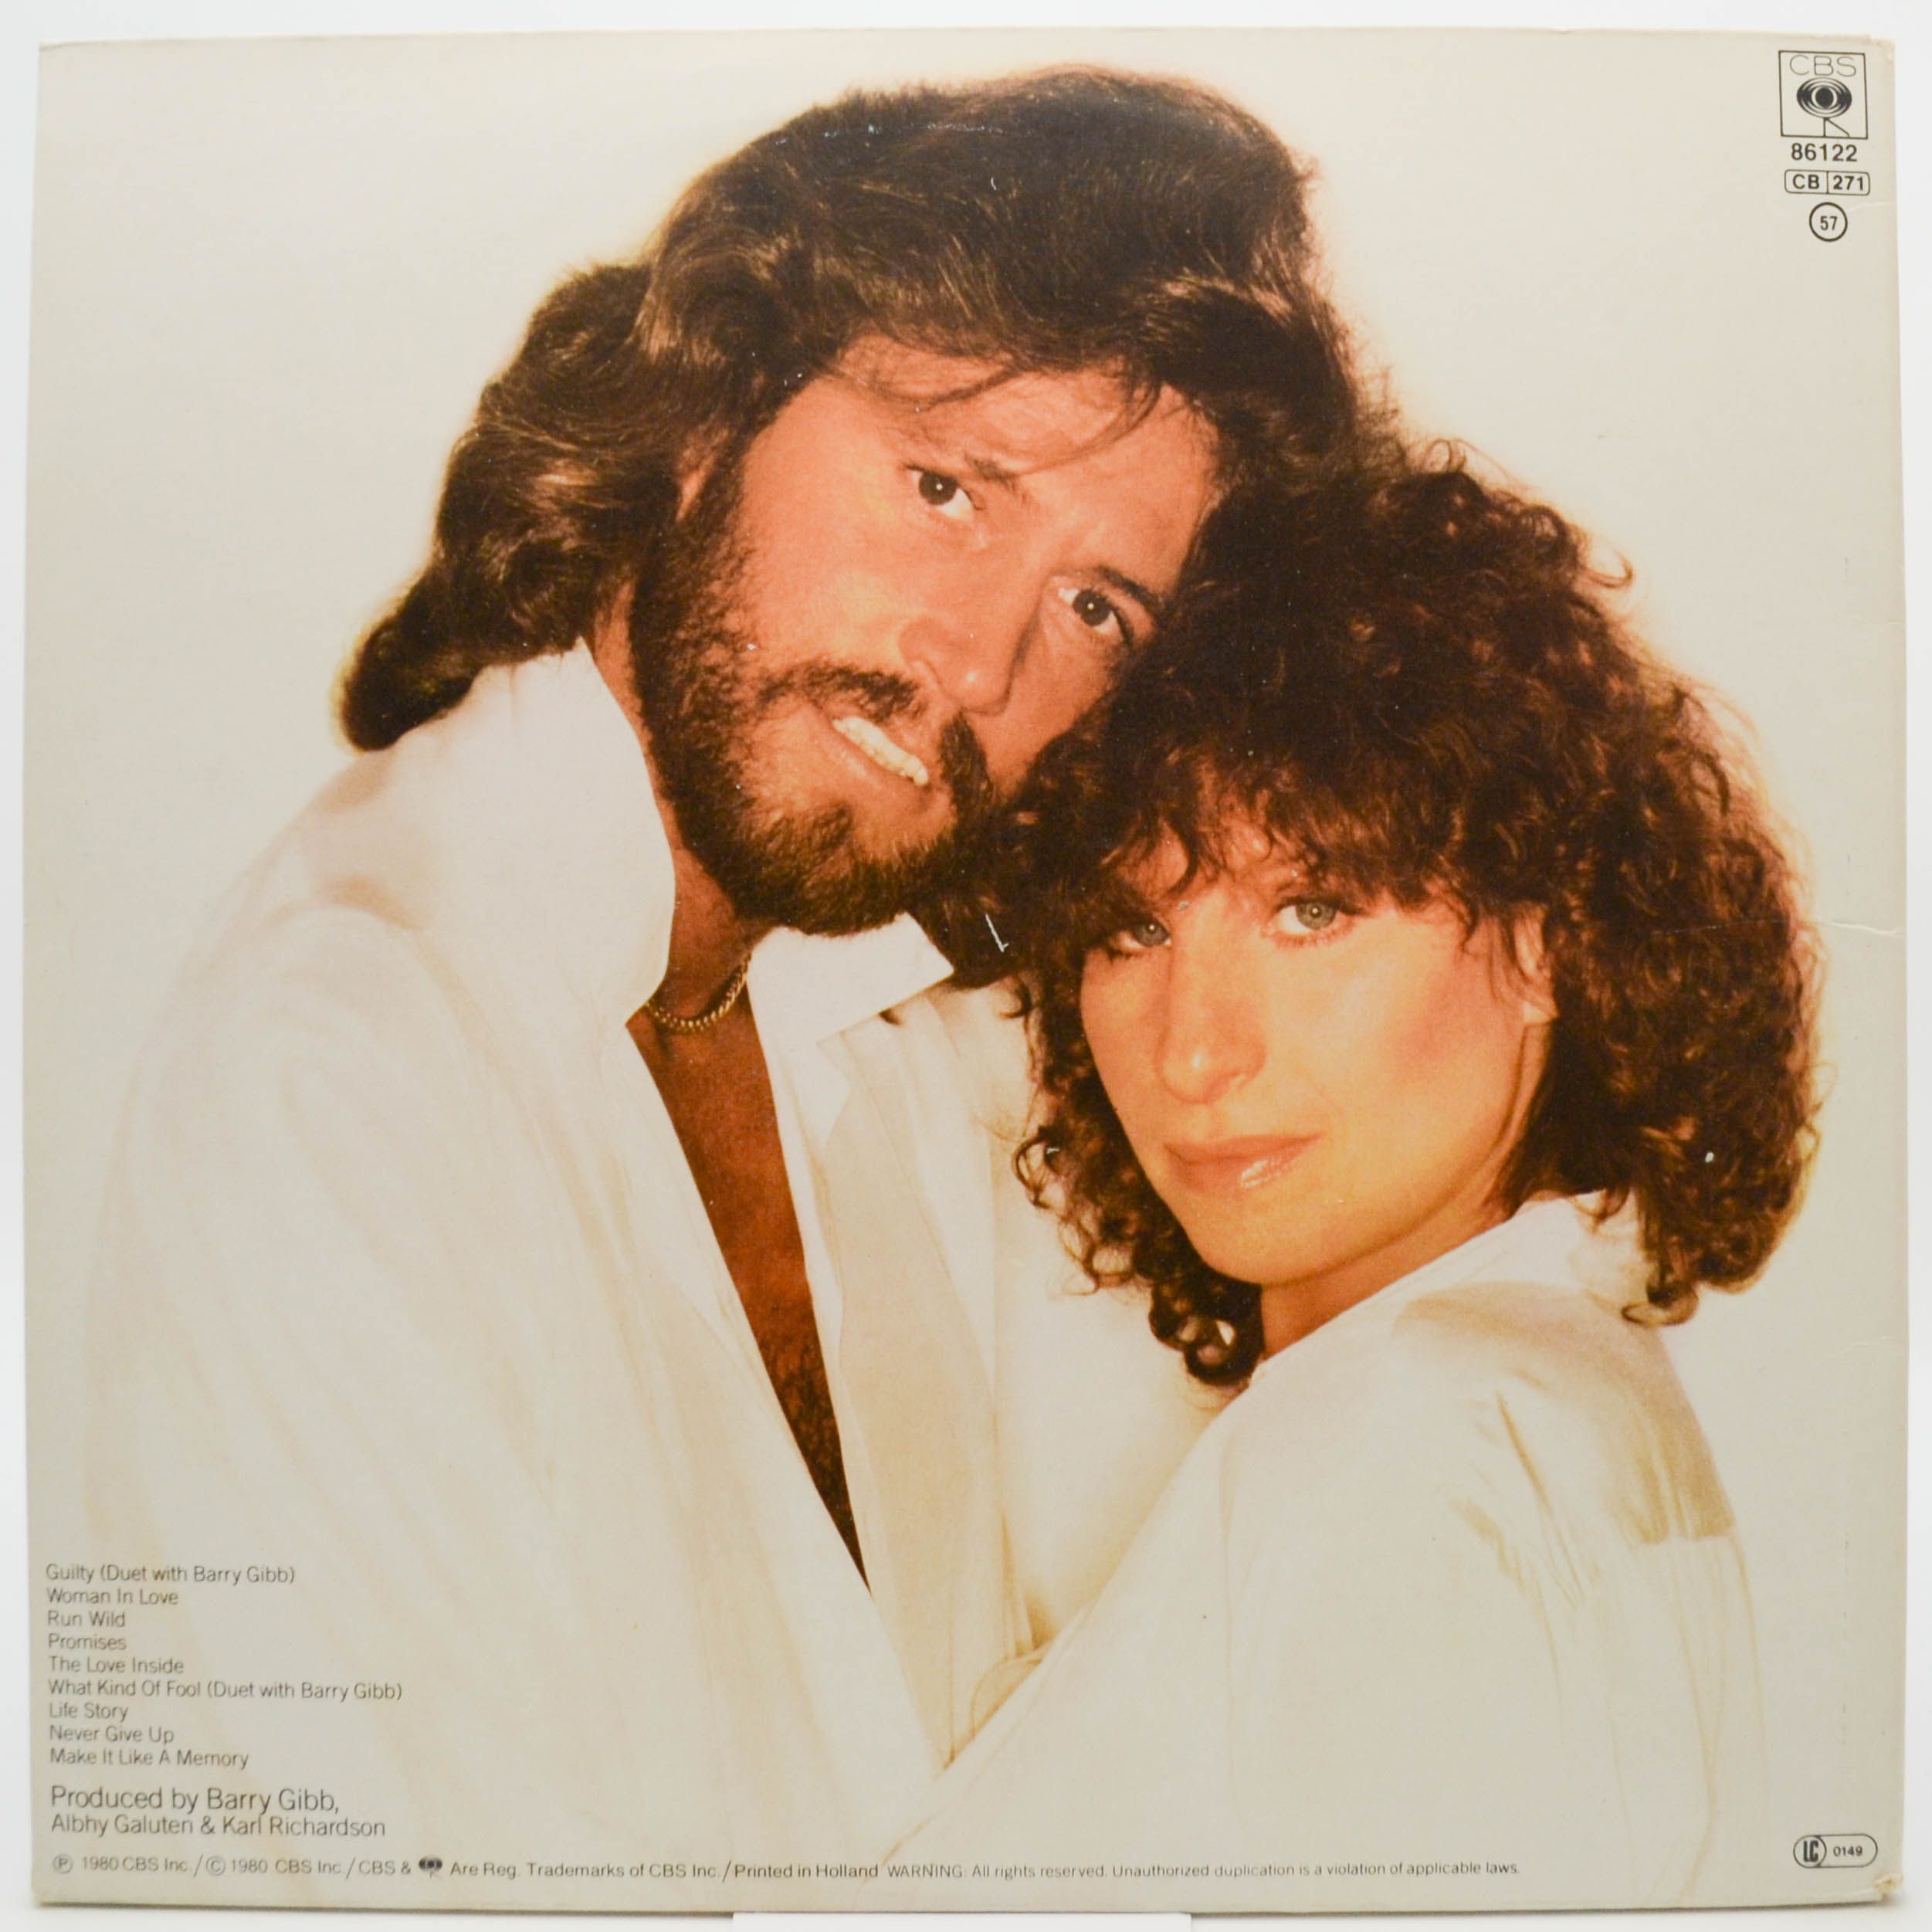 Streisand — Guilty, 1980